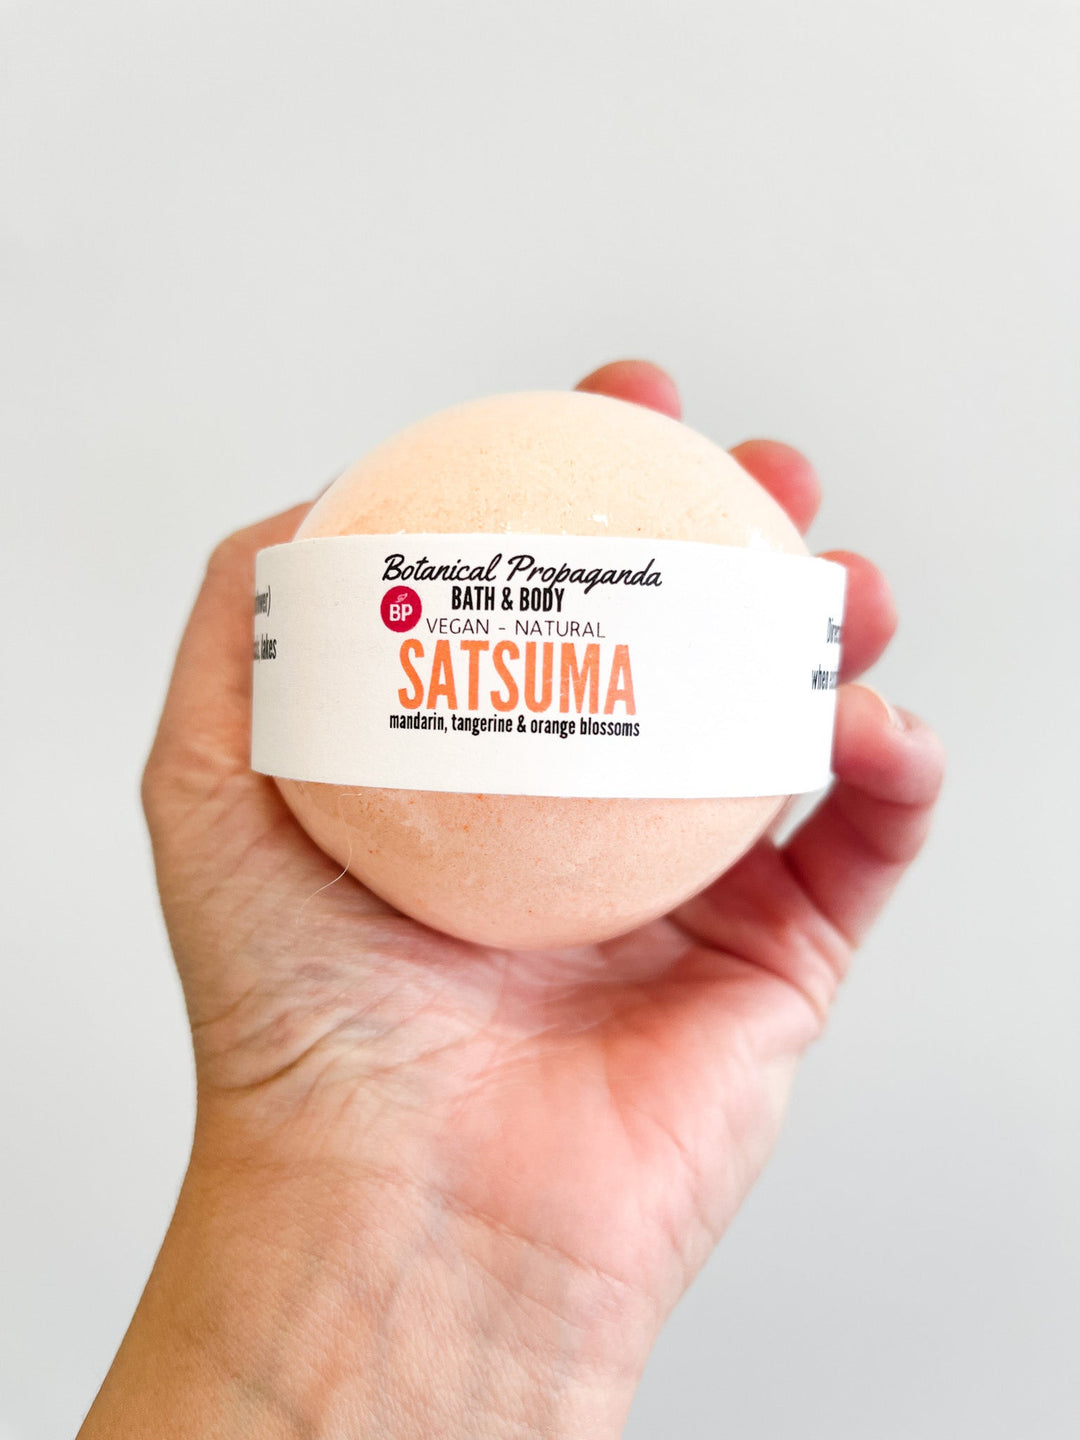 Satsuma Bath Bomb | Botanical Propaganda - Pretty by Her- handmade locally in Cambridge, Ontario